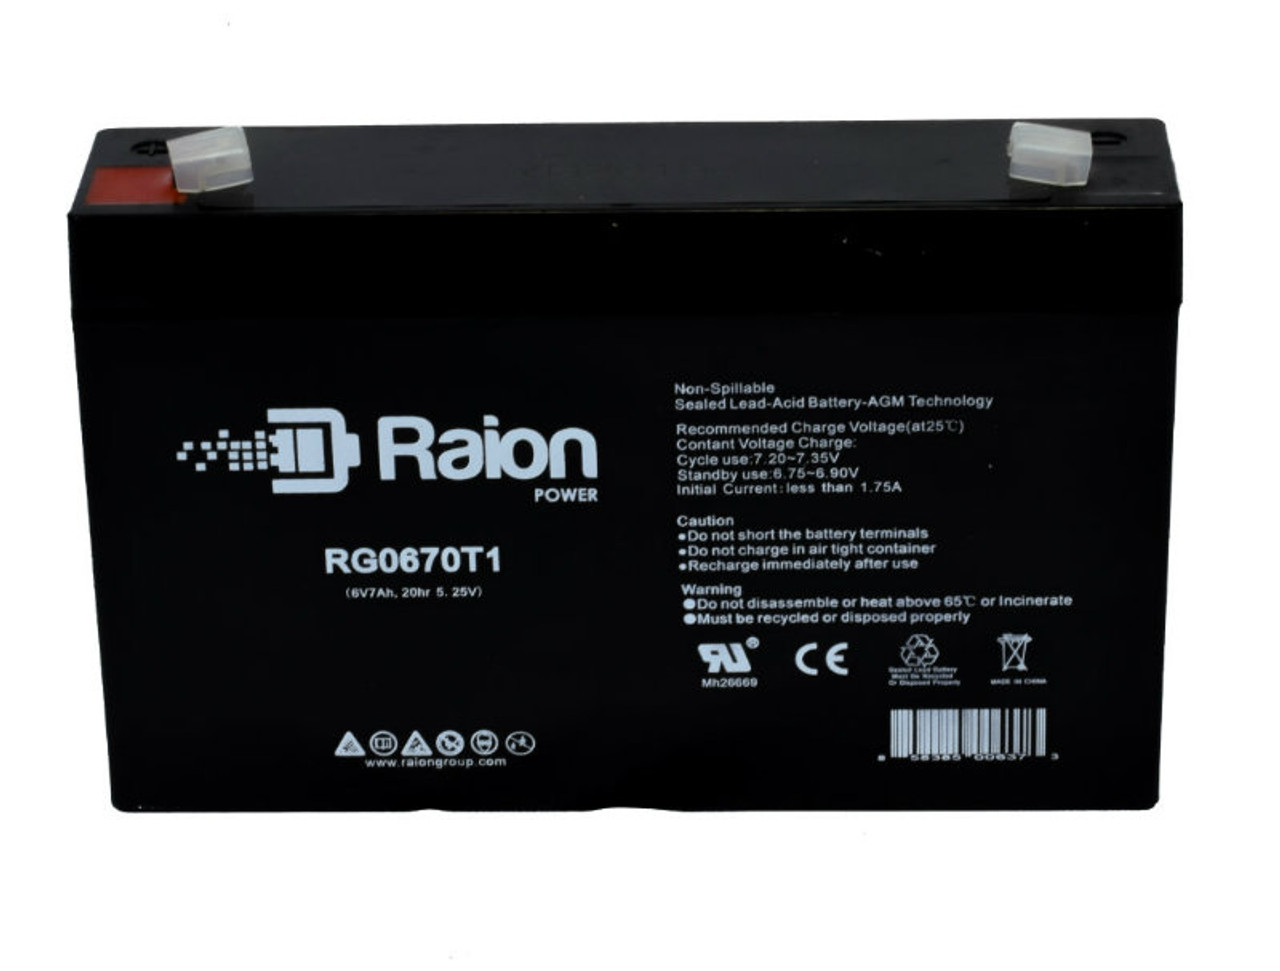 Raion Power RG0670T1 Replacement Battery Cartridge for Emergi-Lite JSM36